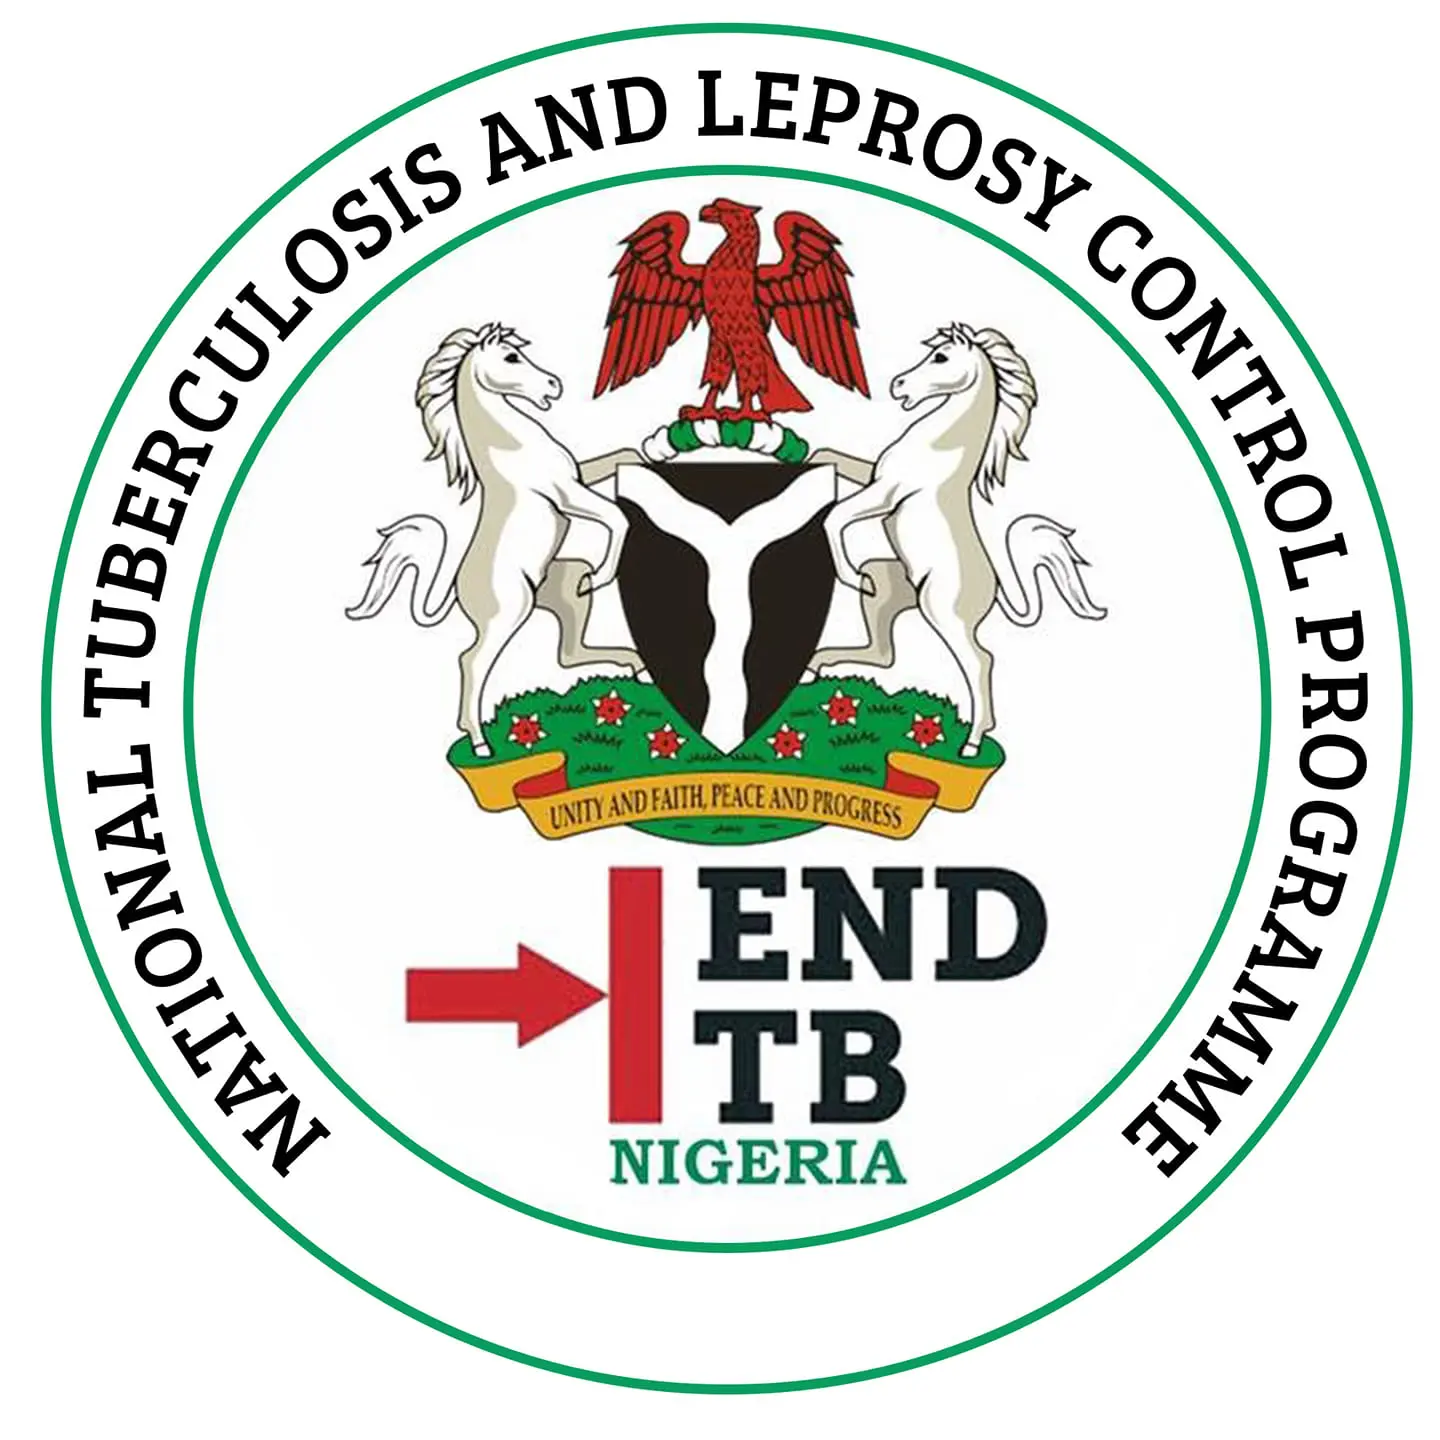 Ekiti NTBLCP, Breakthrough ACTION-Nigeria seek media support to end TB